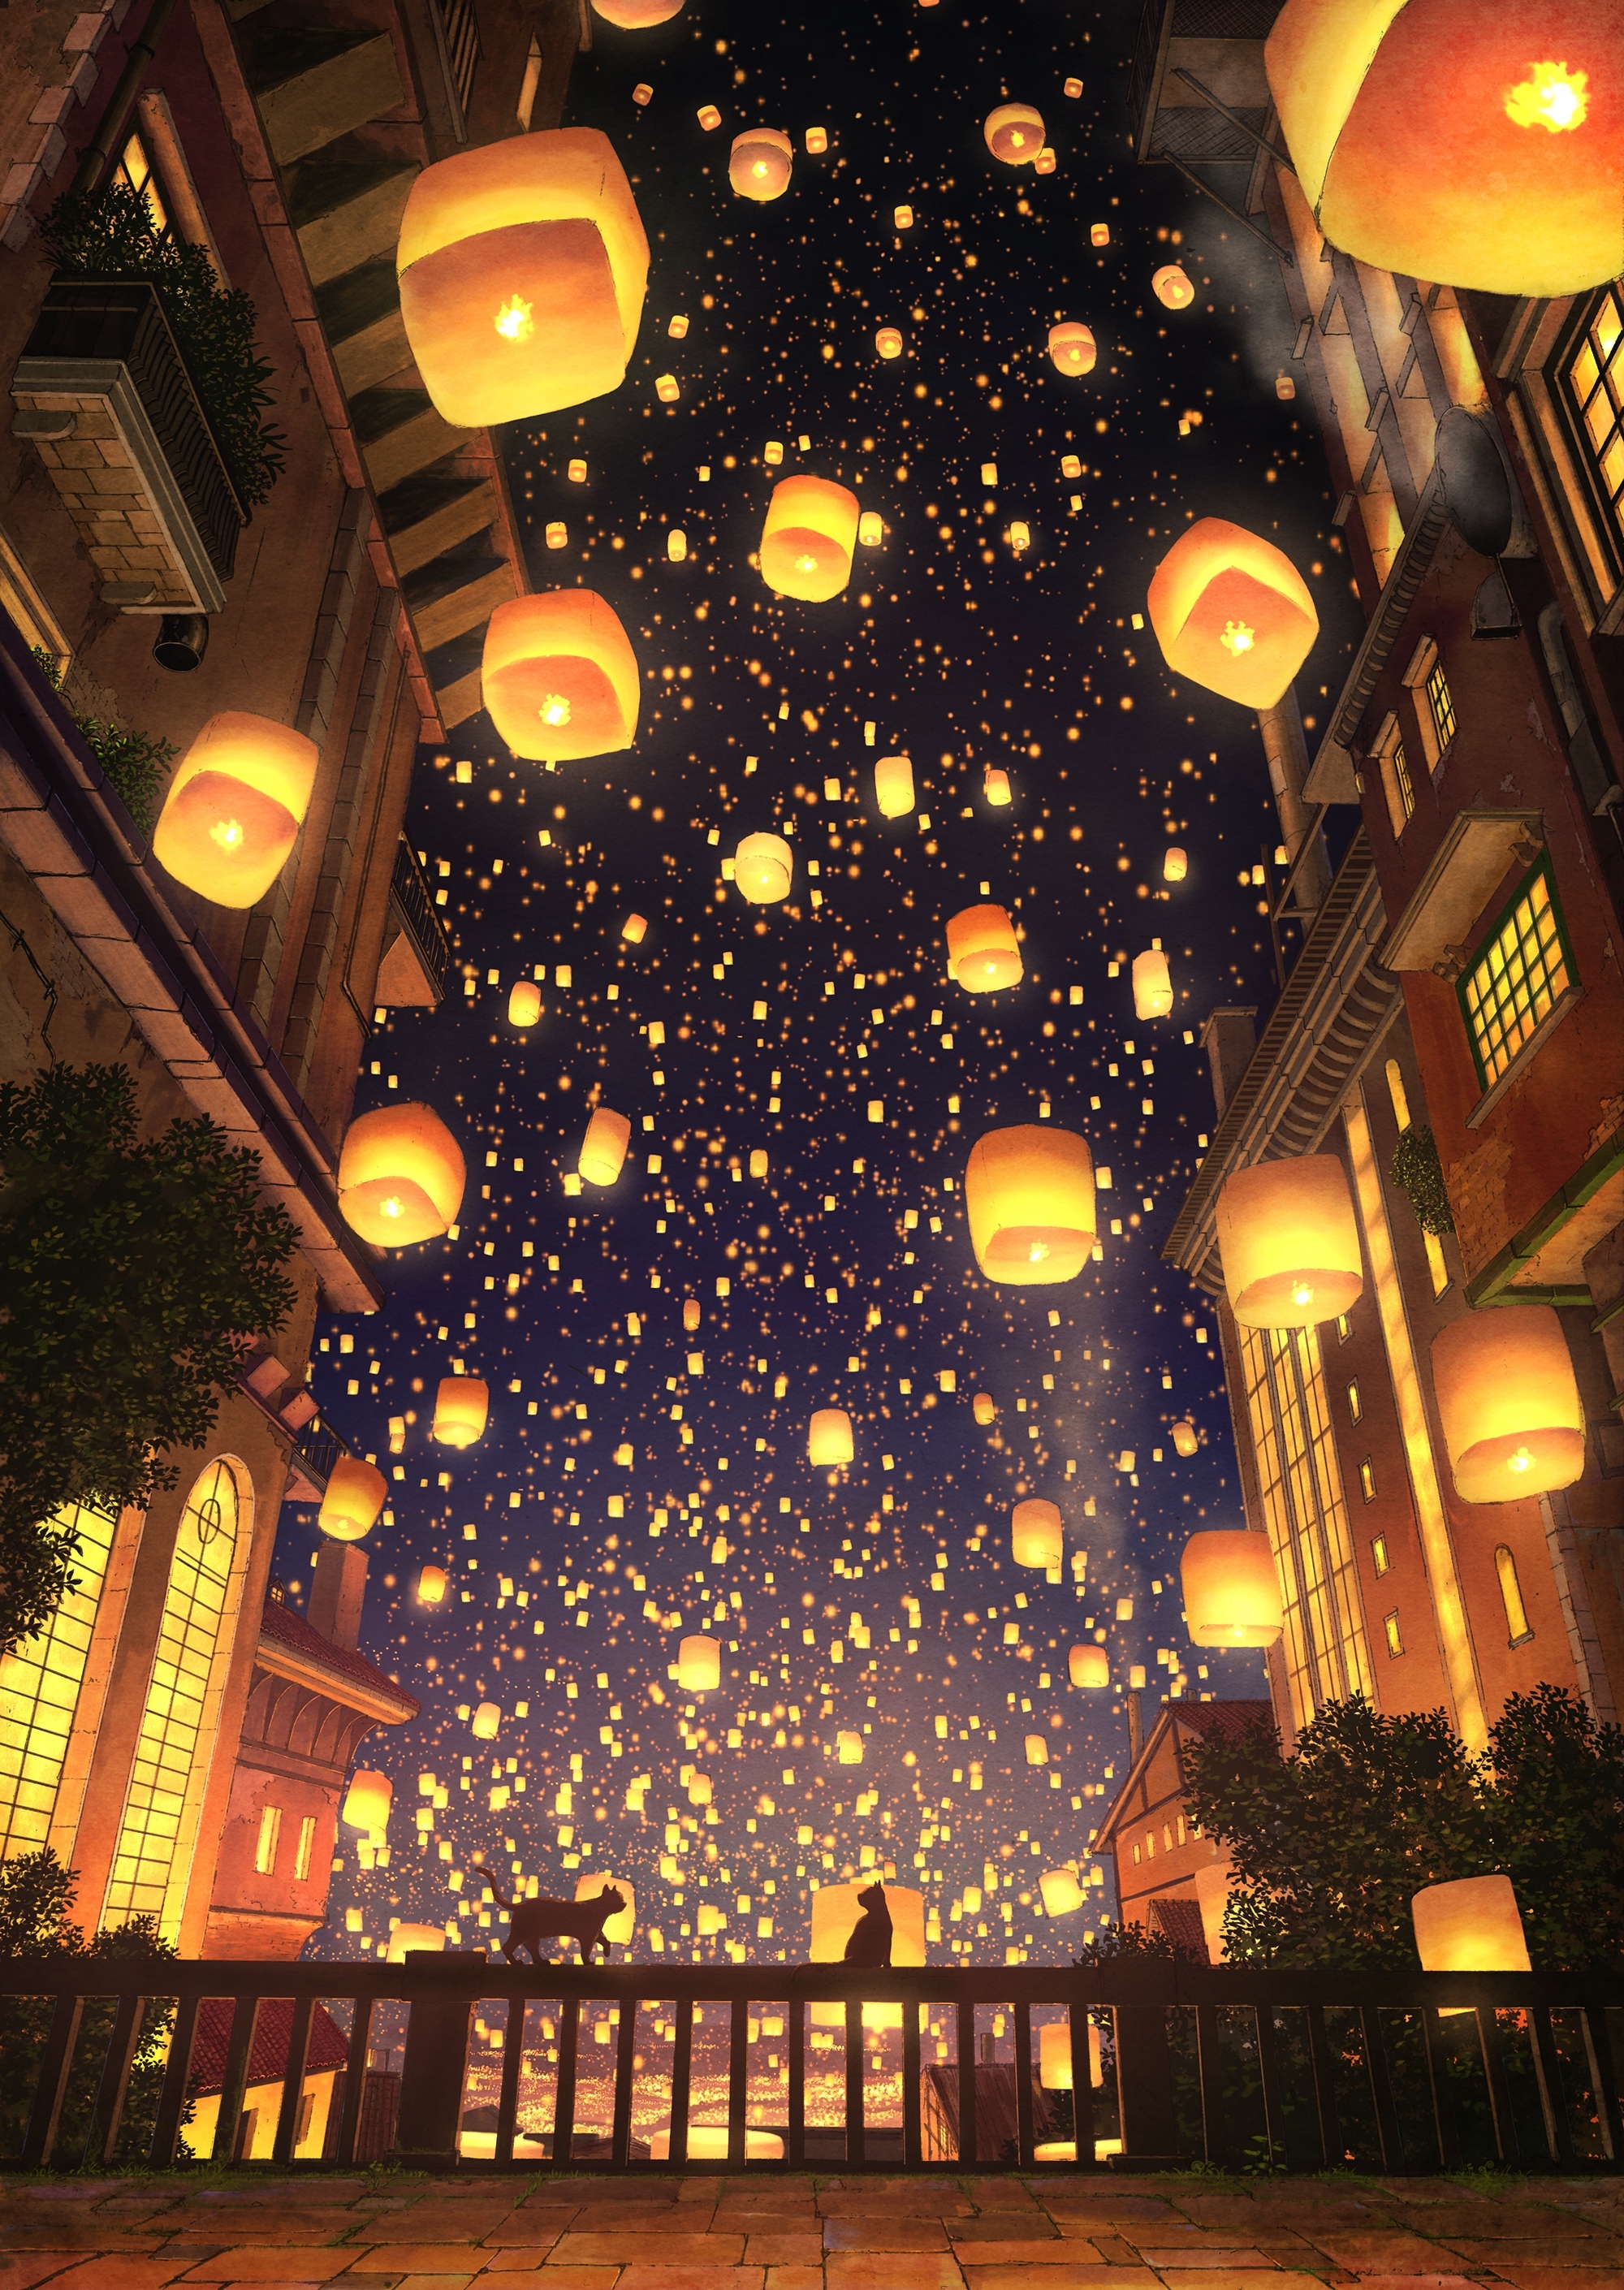 Wallpaper Anime Festival Scenic Mood Lanterns Cats Night